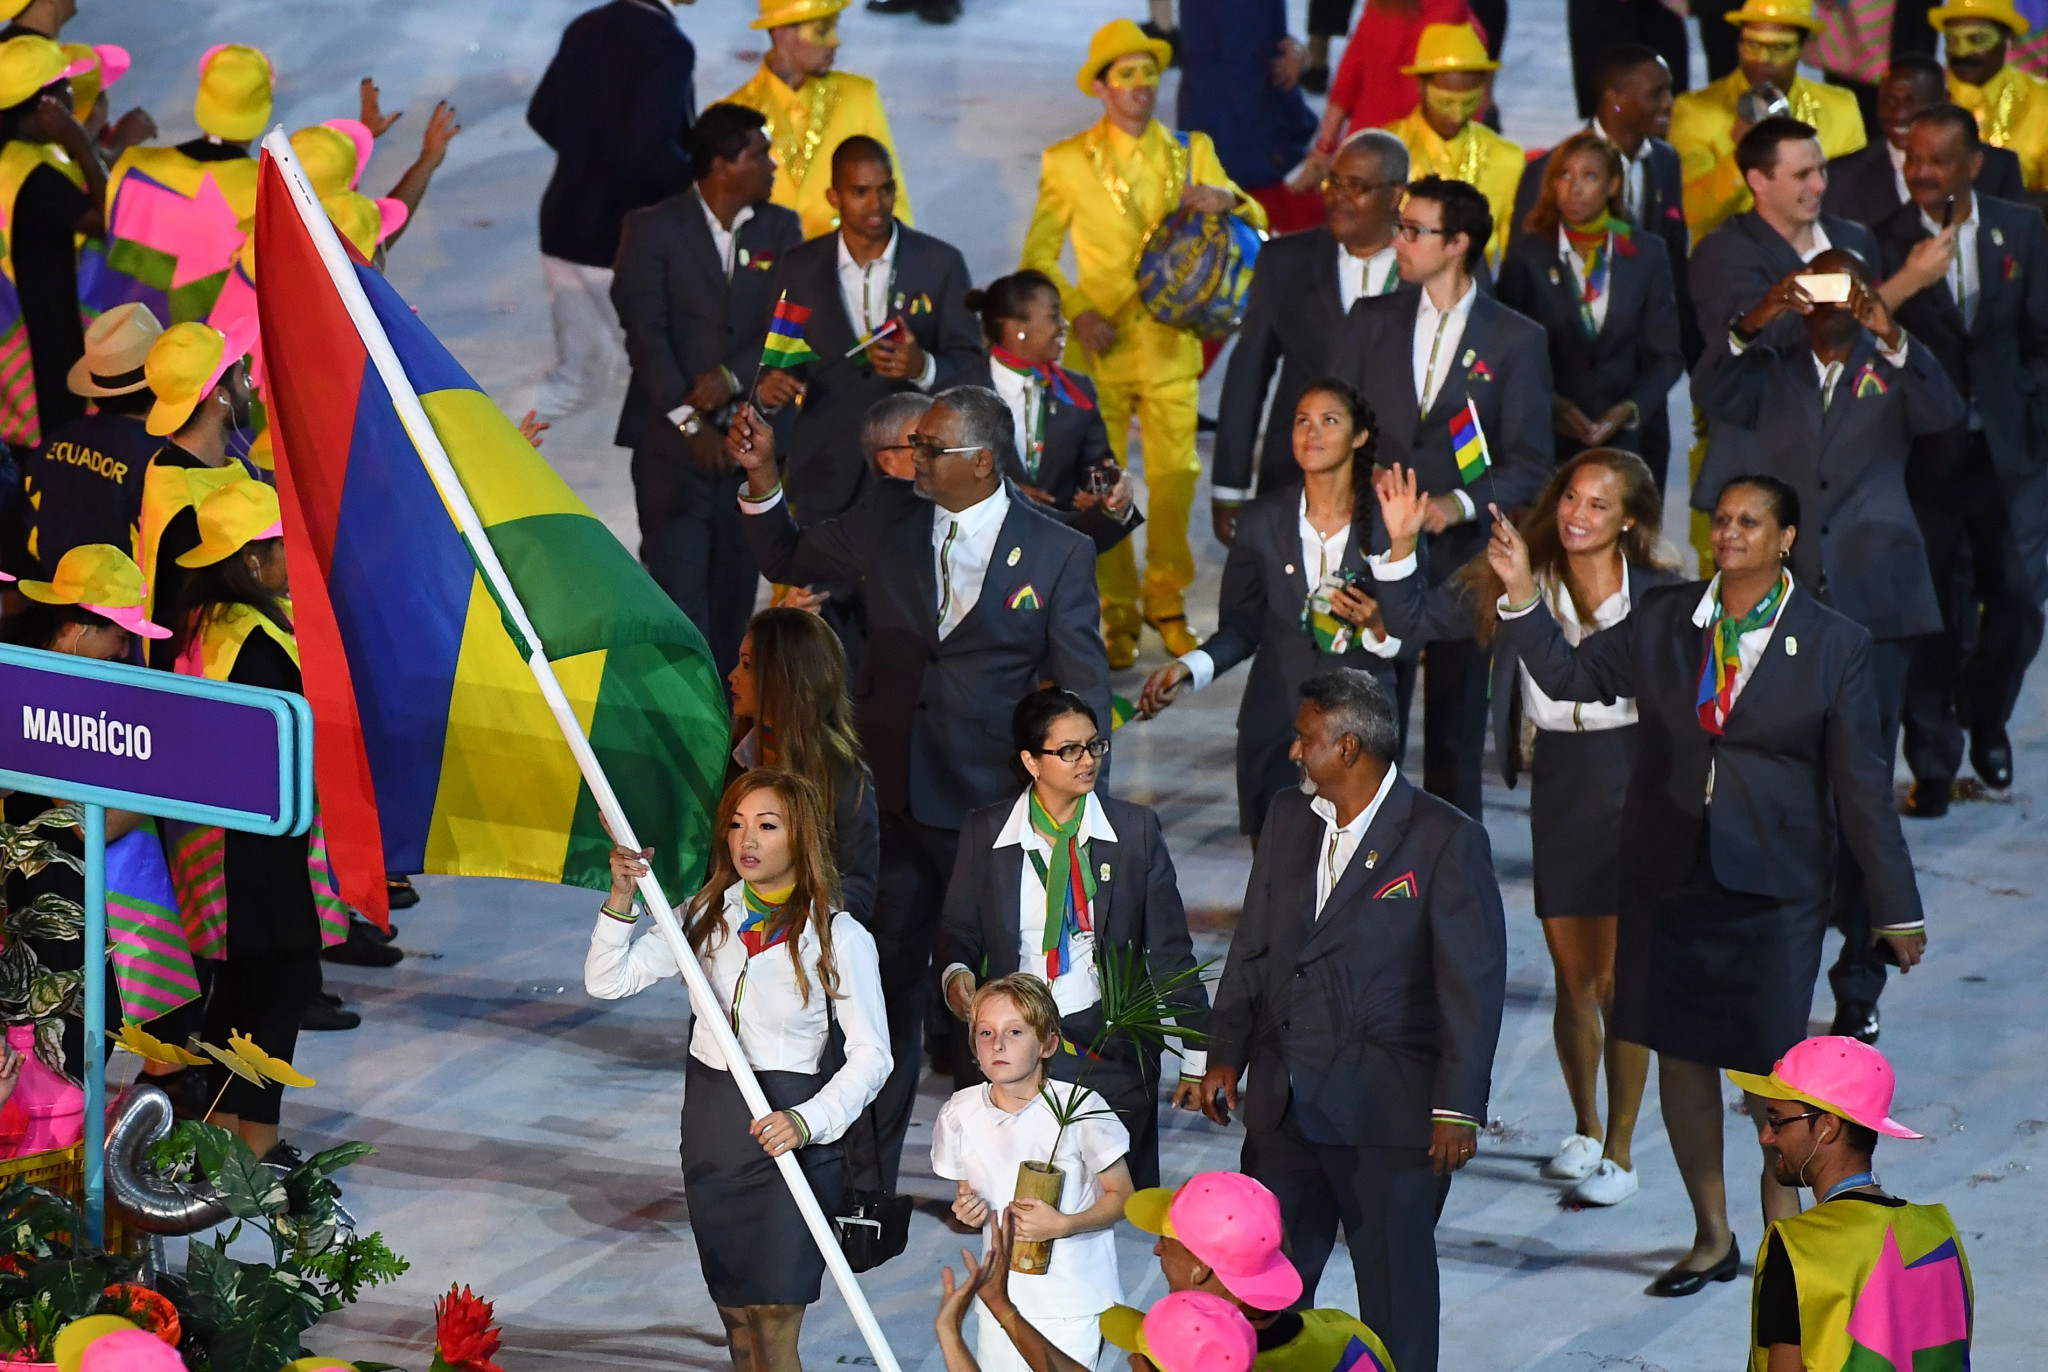 Mauritius judoka Feuillet looks towards Tokyo 2020 after World Championships